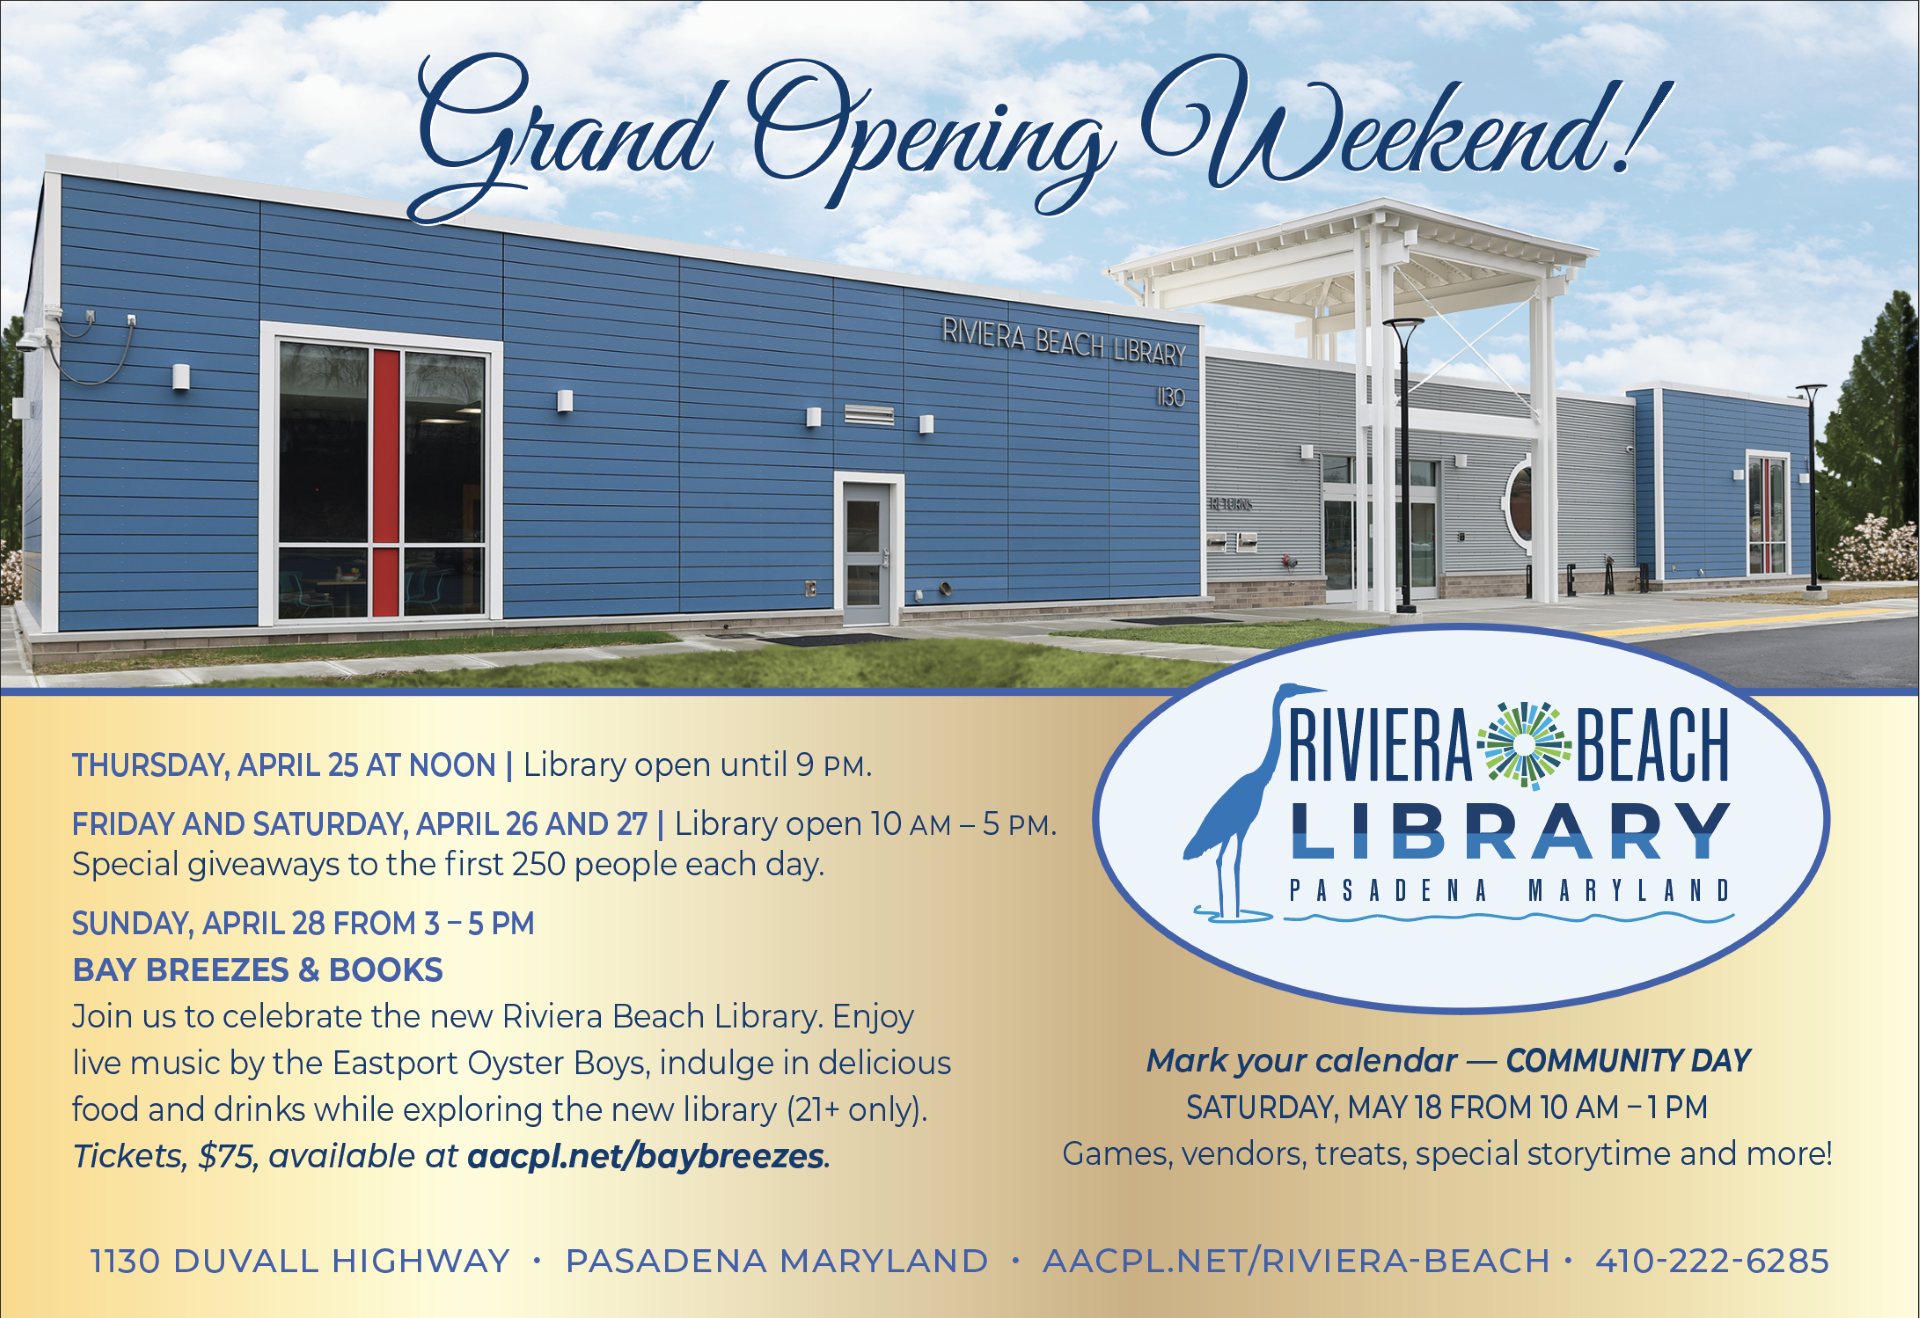 New Riviera Beach Library rendering